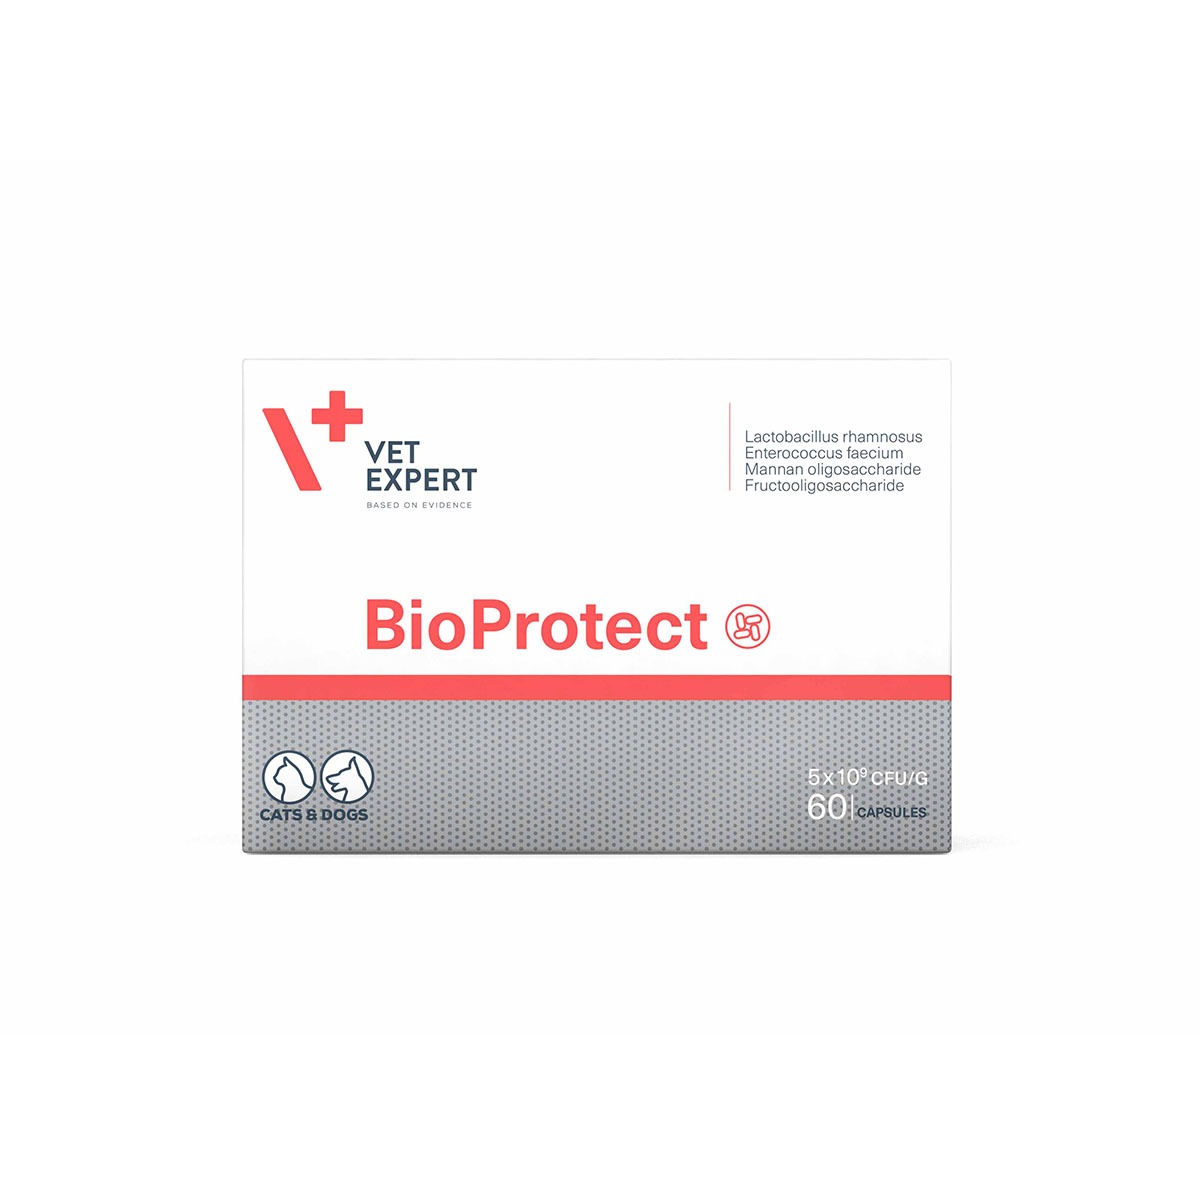 VetExpert BioProtect 60 Kapseln Diätergänzungsfuttermittel Tierarztbedarf, Veterinärbedarf, Veterinärmedizin, Praxisbedarf, Ergänzungsfuttermittel, Tierarztprodukten, Tierapotheke, Tierpflegeprodukte